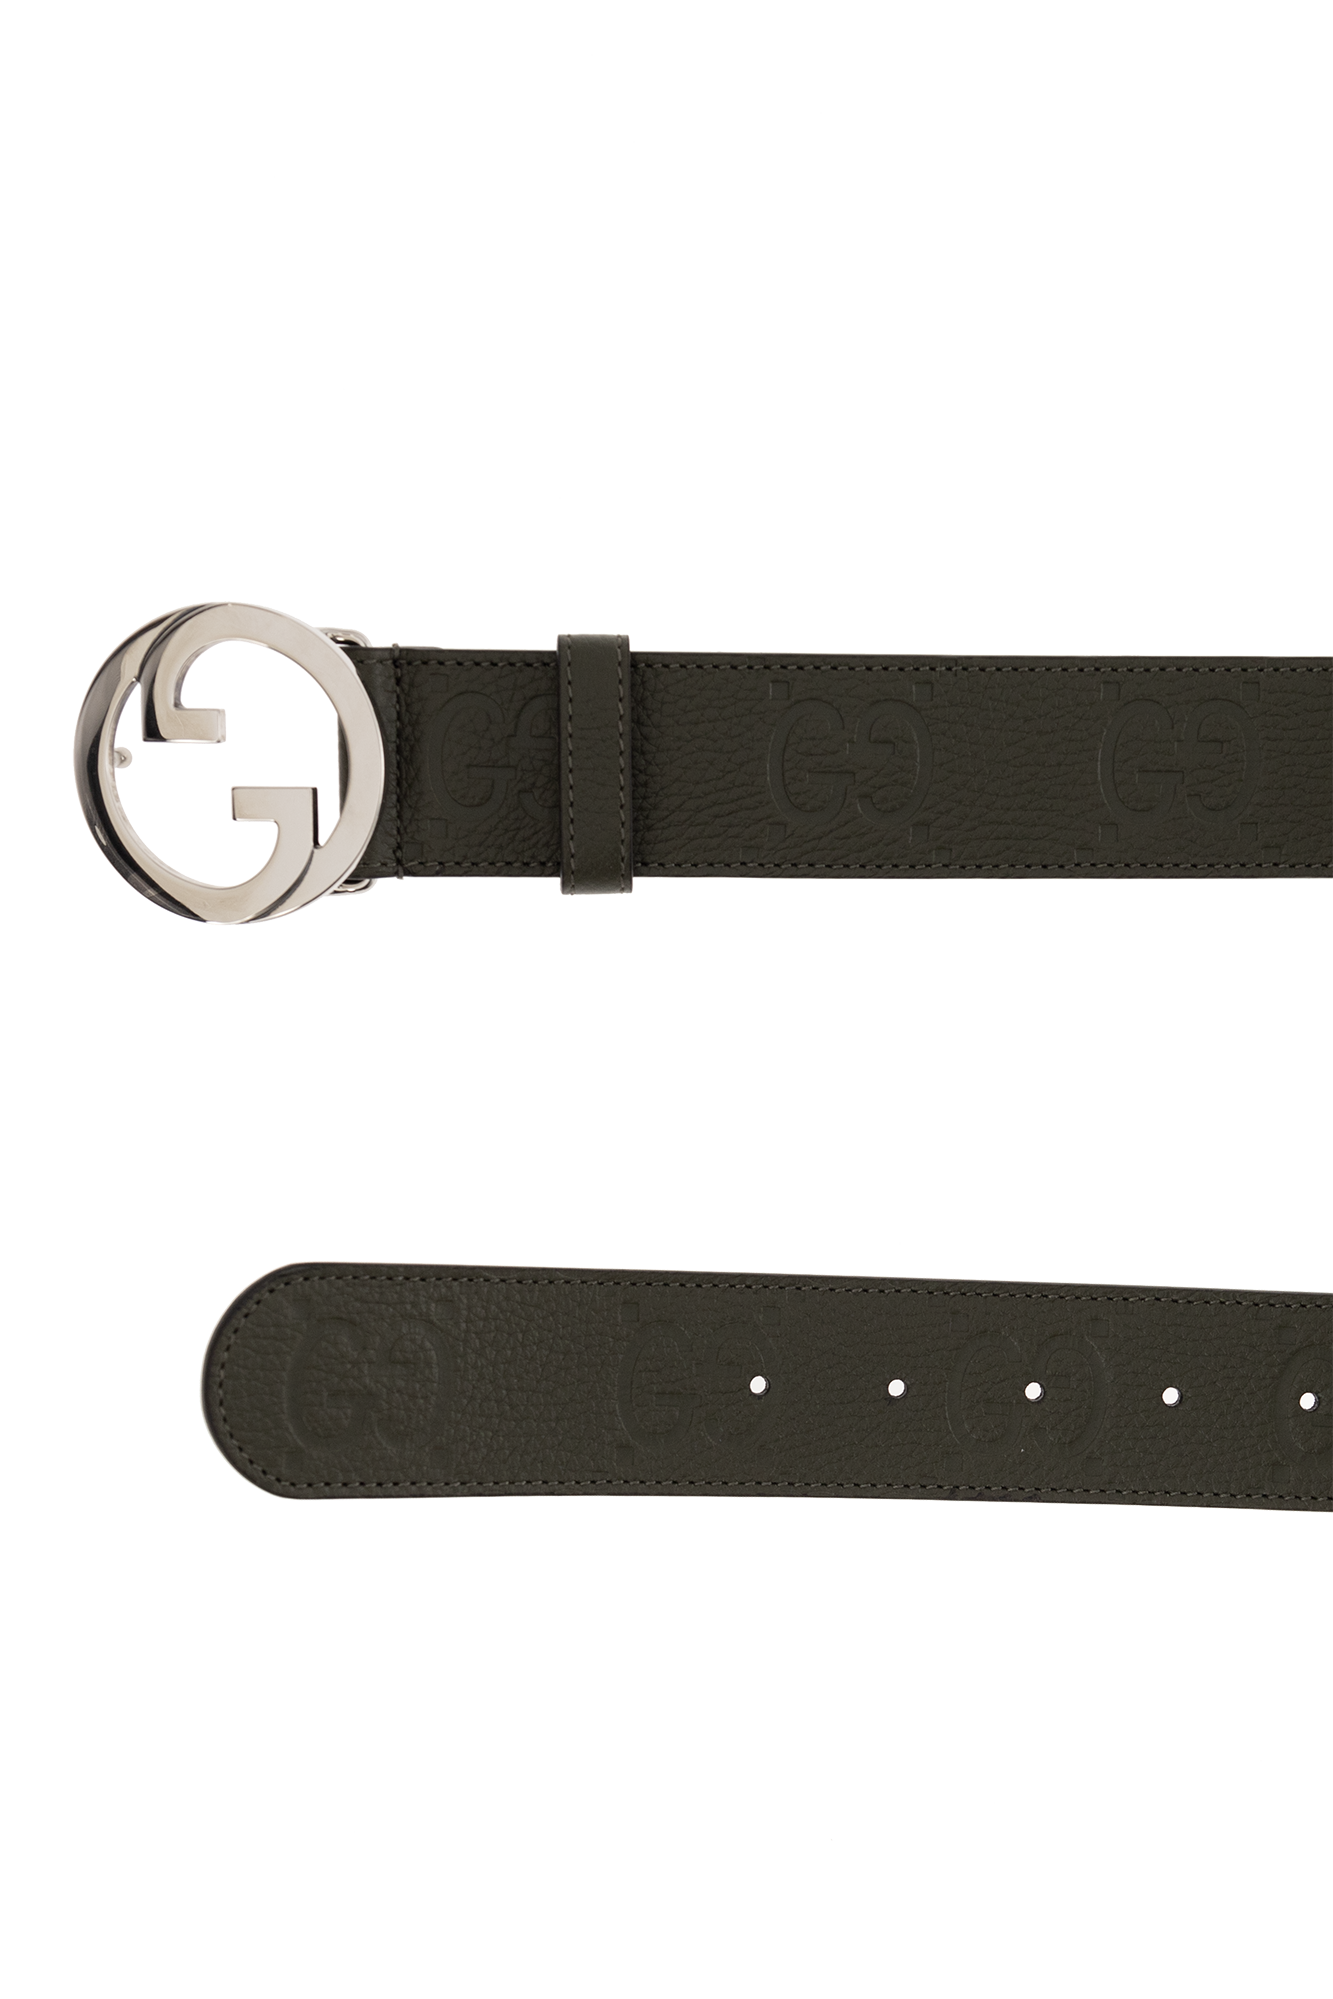 Lacoste Men's Embossed Leather Monogram Belt